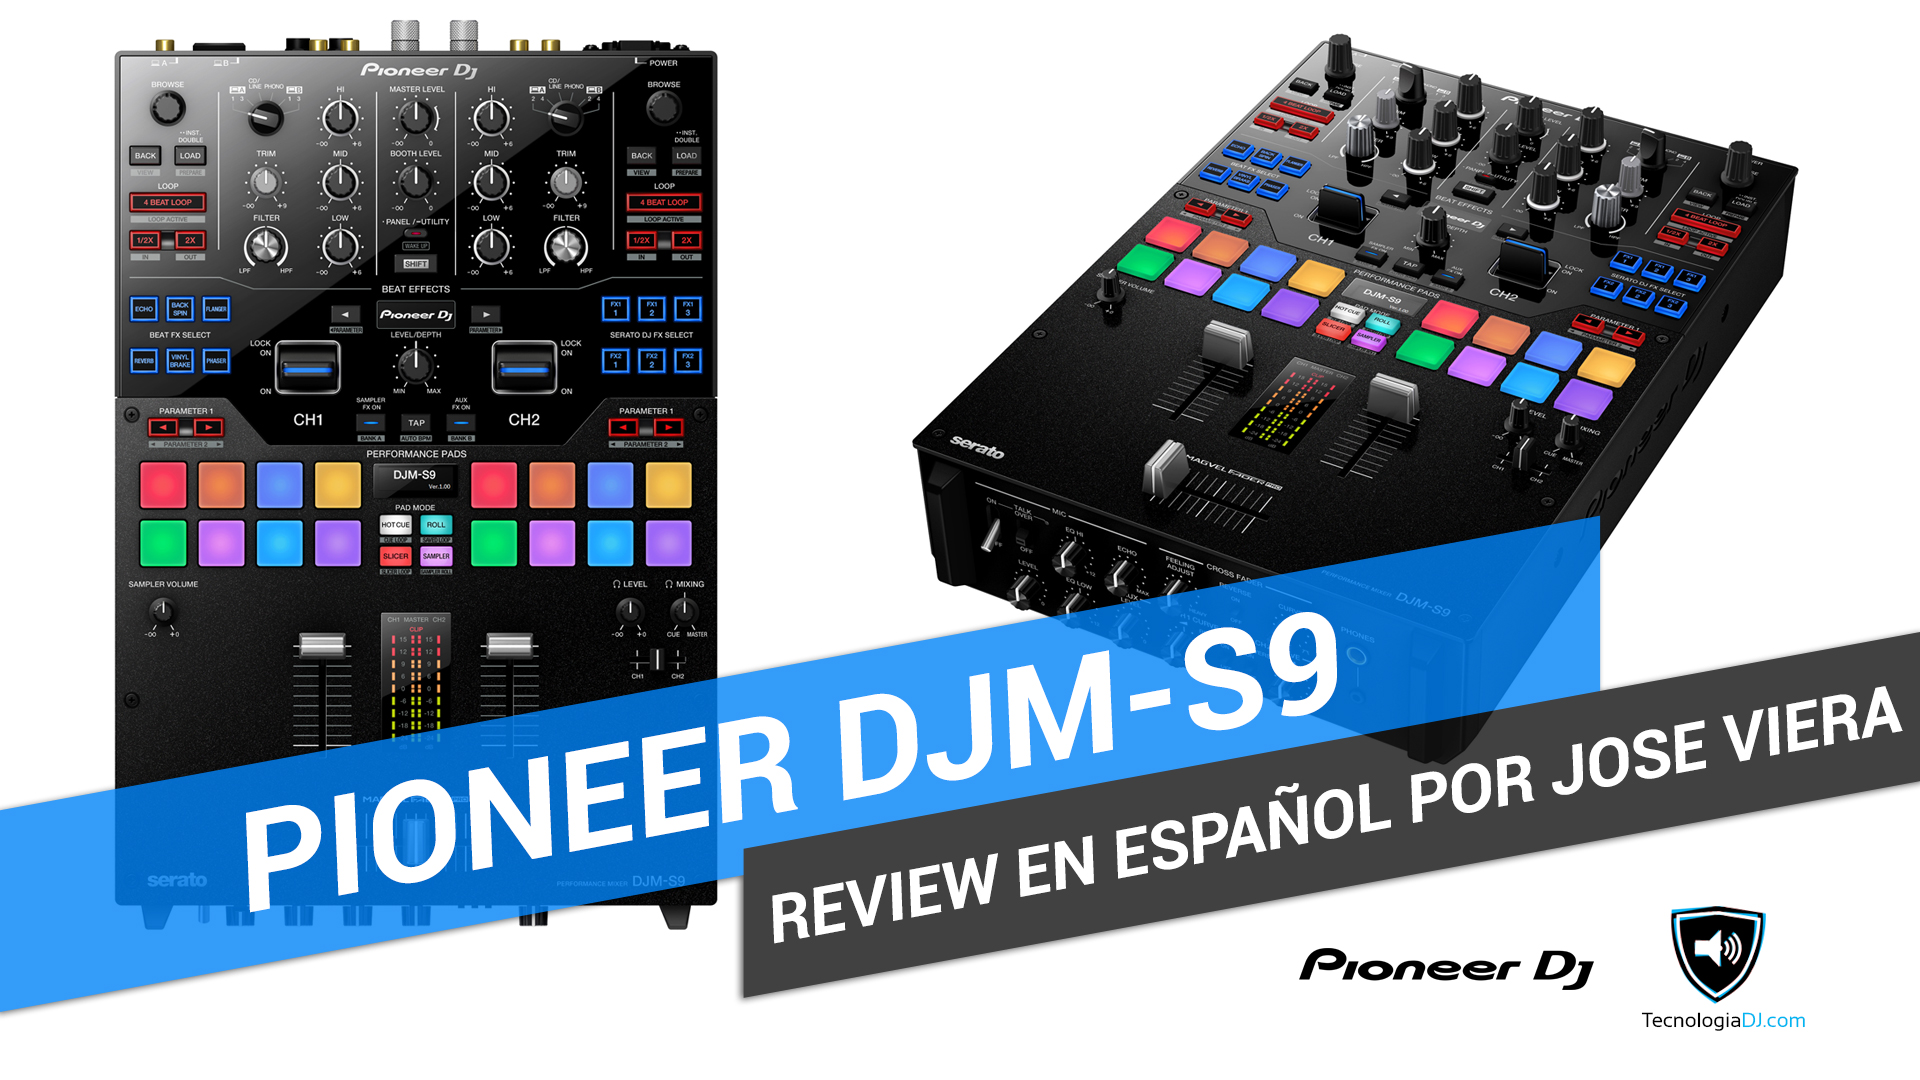 Review en español mixer Pioneer DJM-S9